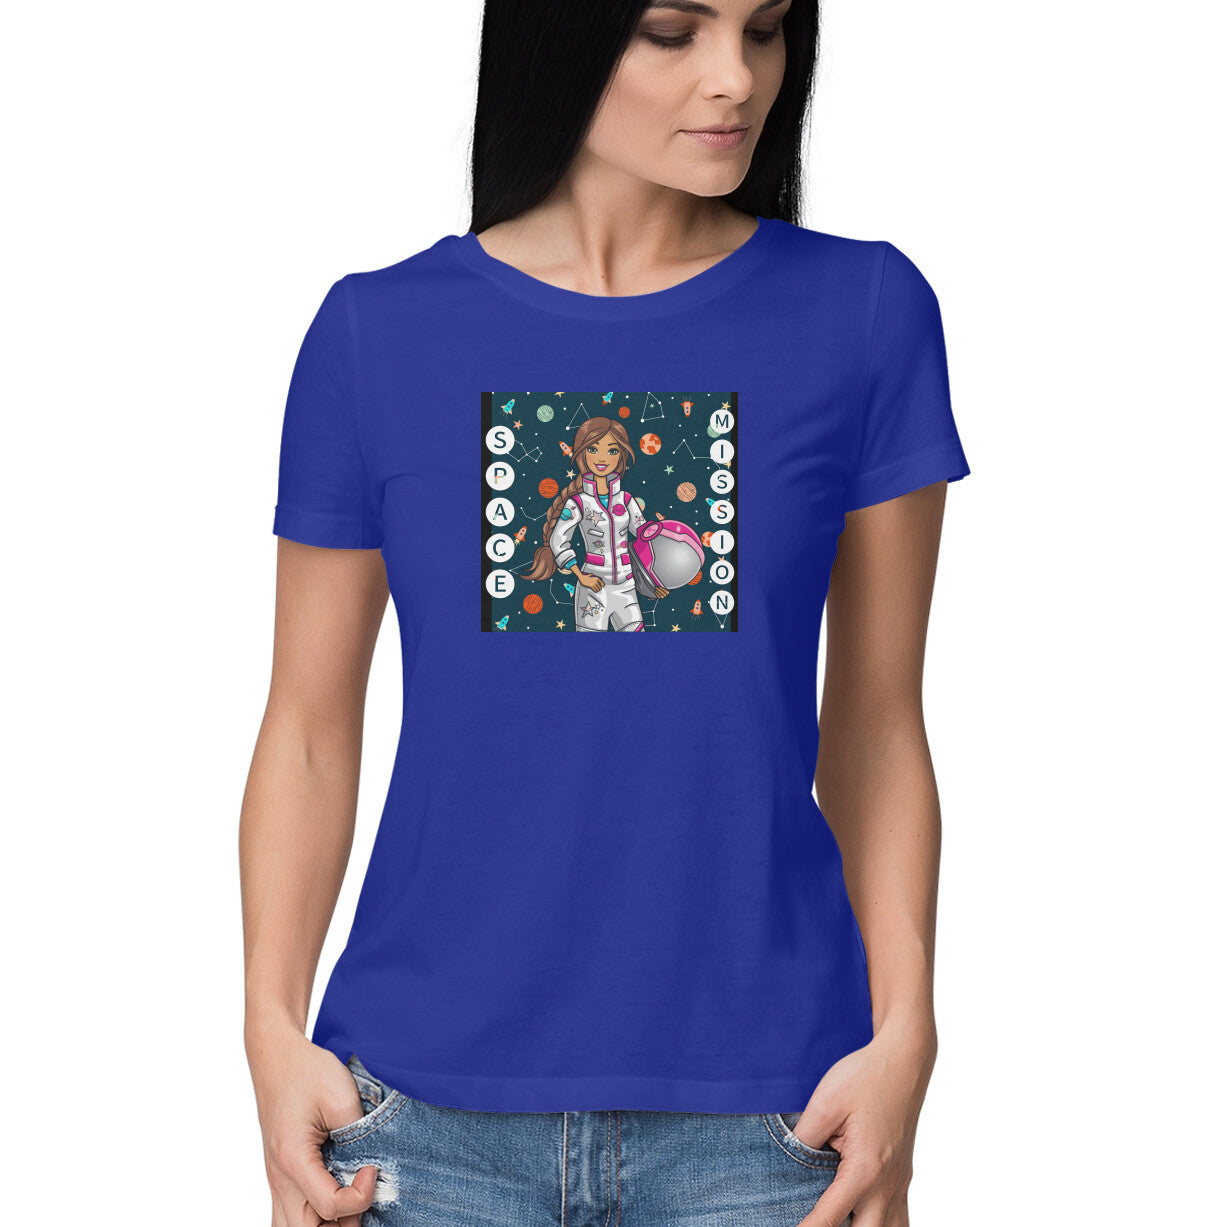 Astronaut Space Royal Blue T-shirt for Women